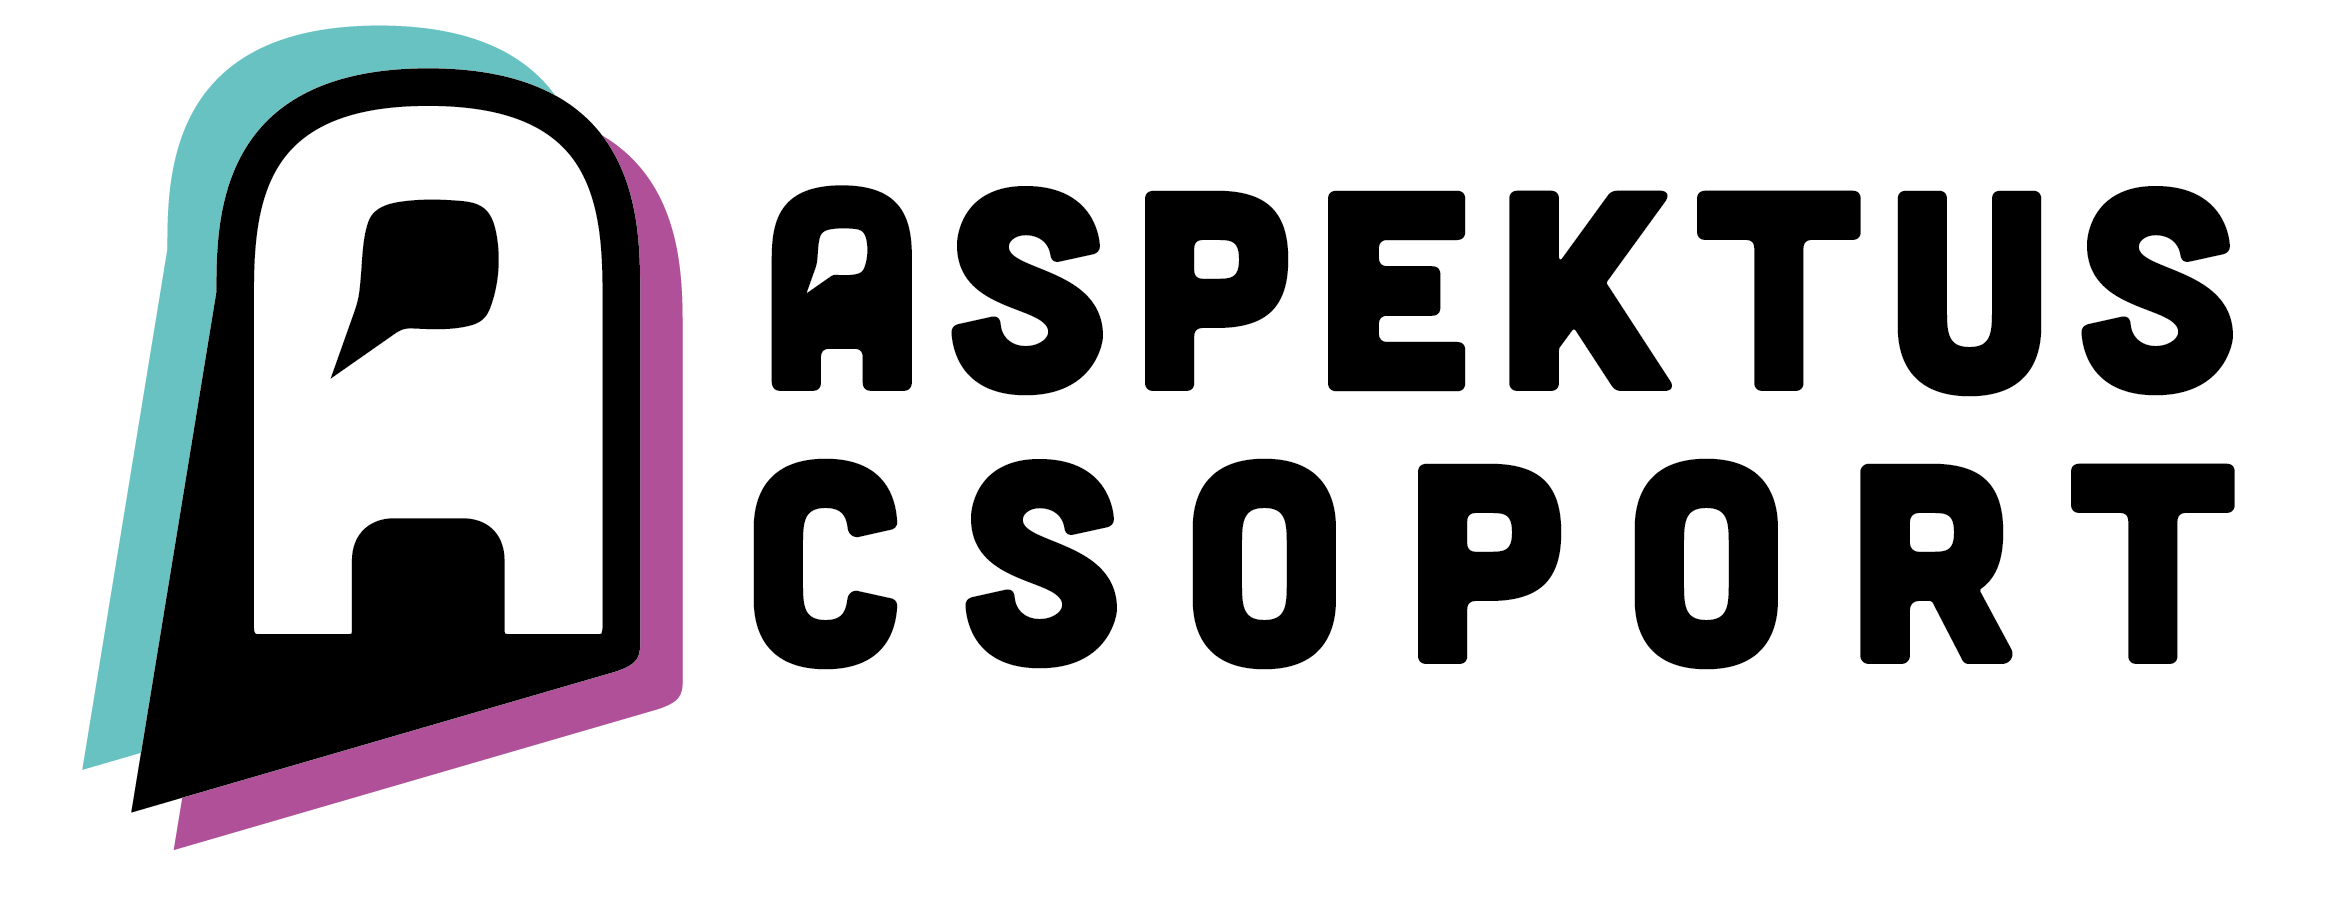 Aspektus Csoport